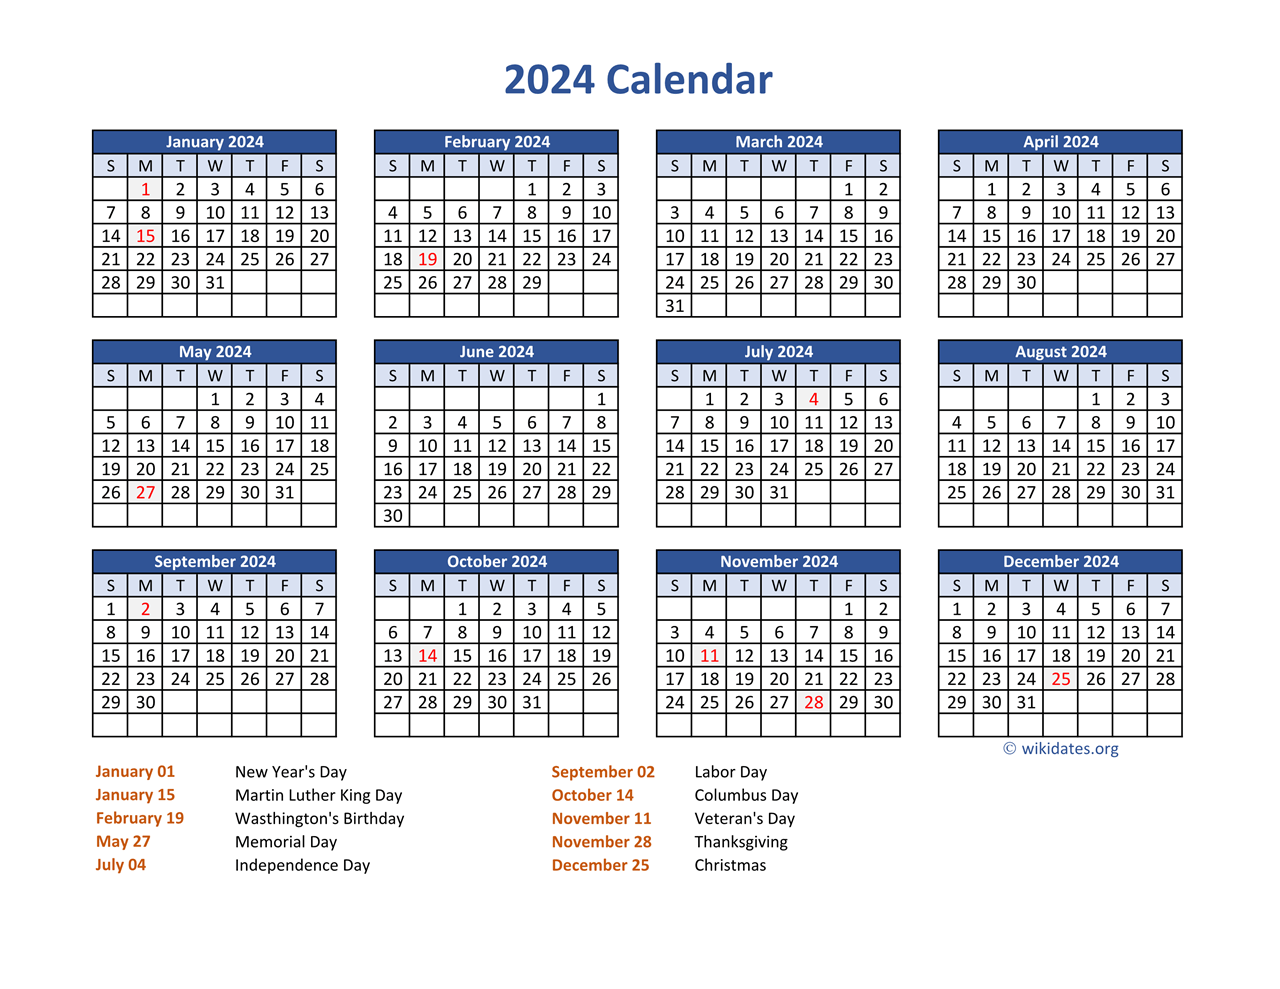 PDF Calendar 2024 With Federal Holidays WikiDates